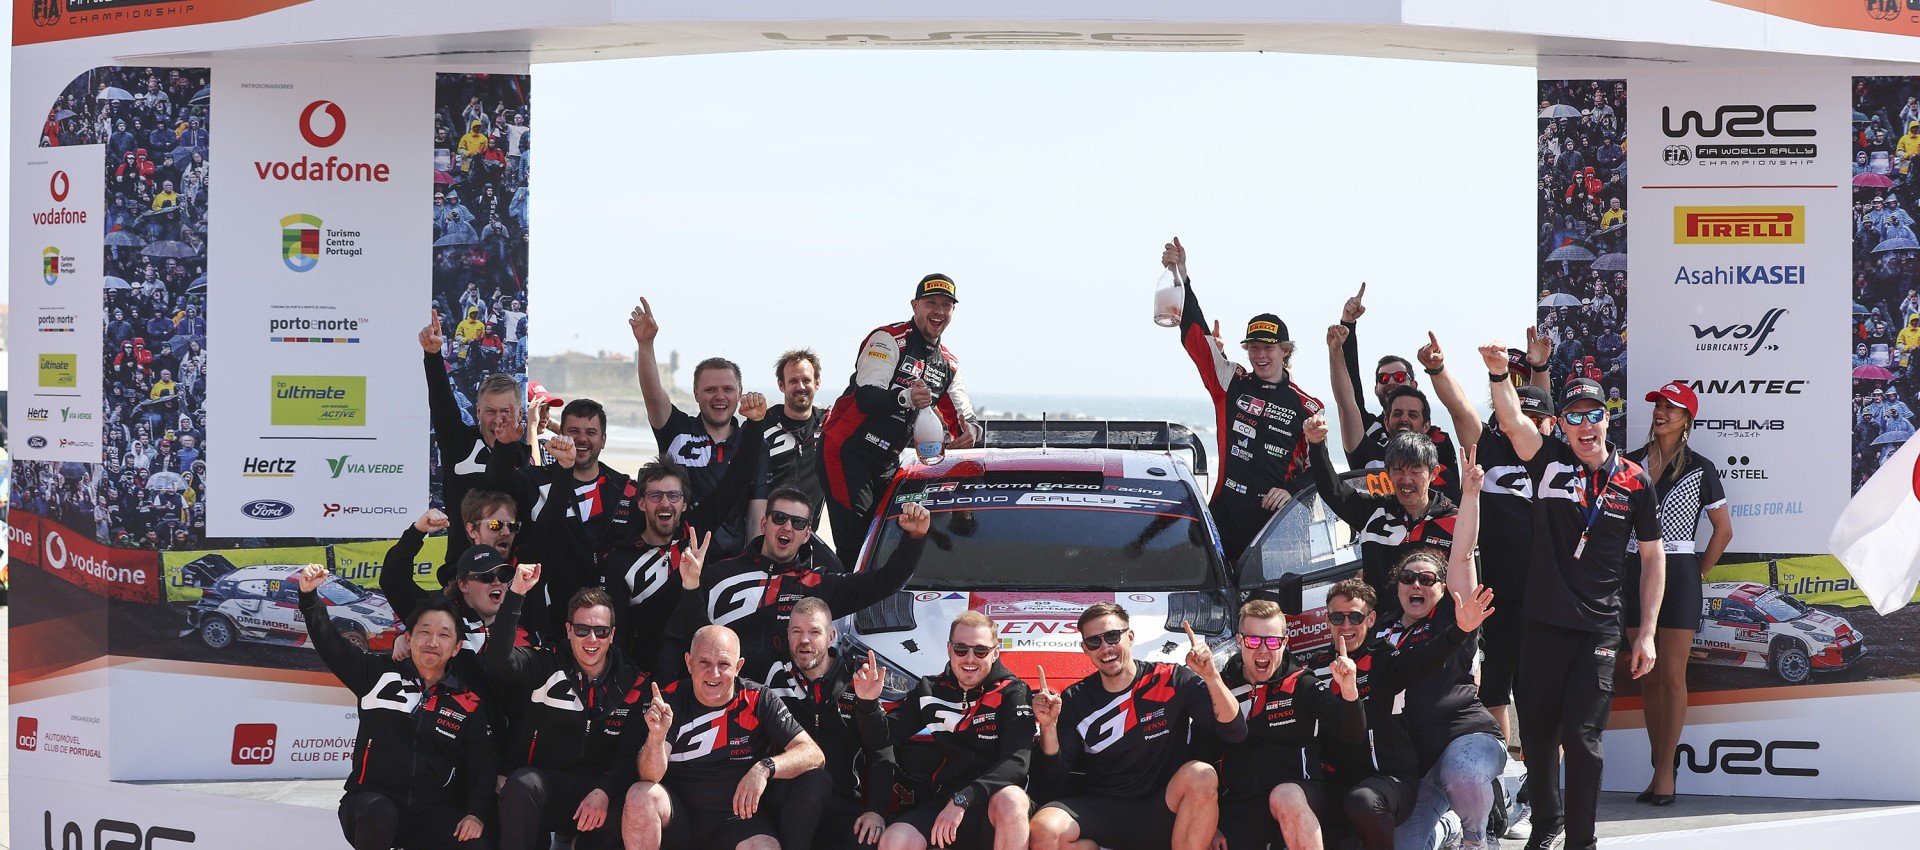 Rovamperä vince e si prende la testa del mondiale al Rally De Portugal con TOYOTA GAZOO Racing 